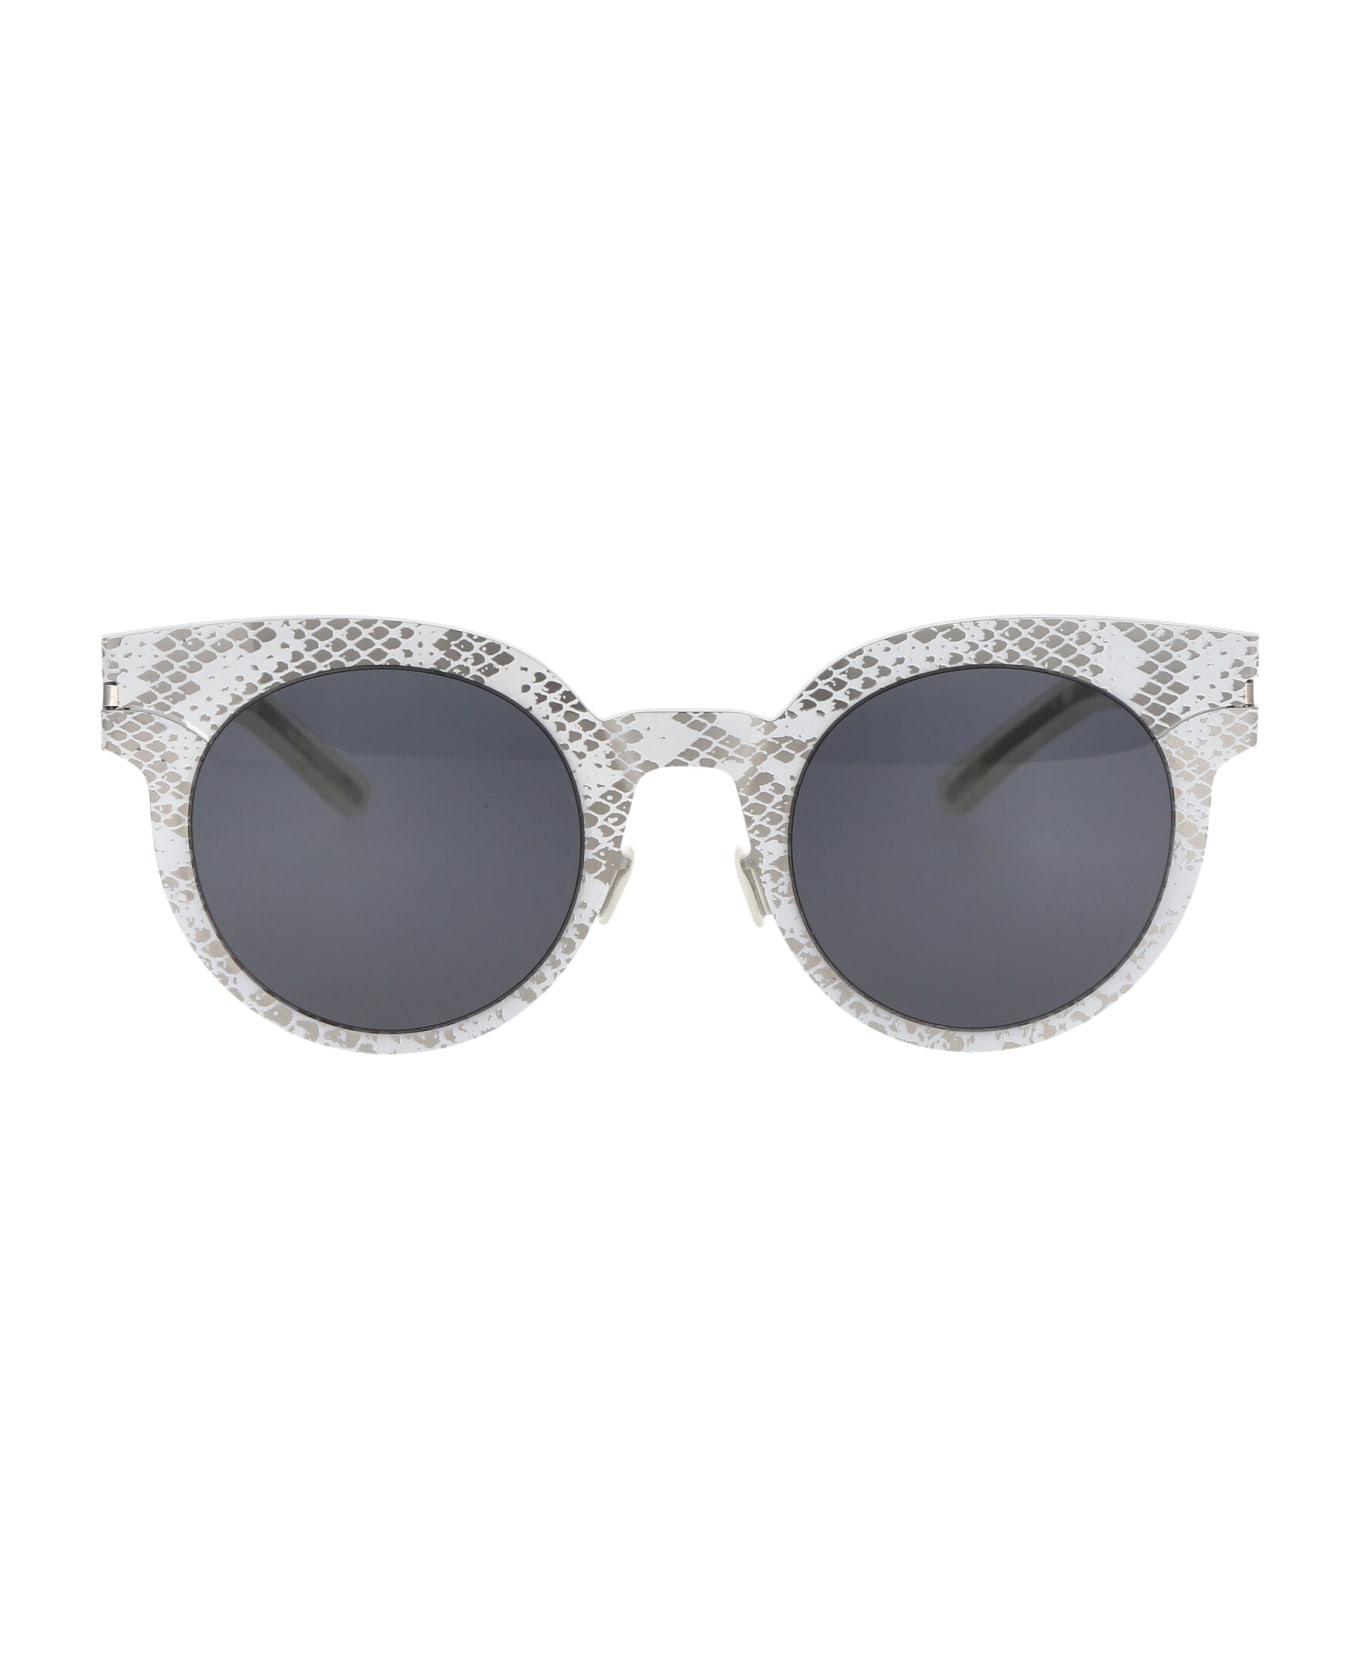 Mykita Mmtransfer001 Sunglasses - 241 Silver White Python Dark Grey Solid